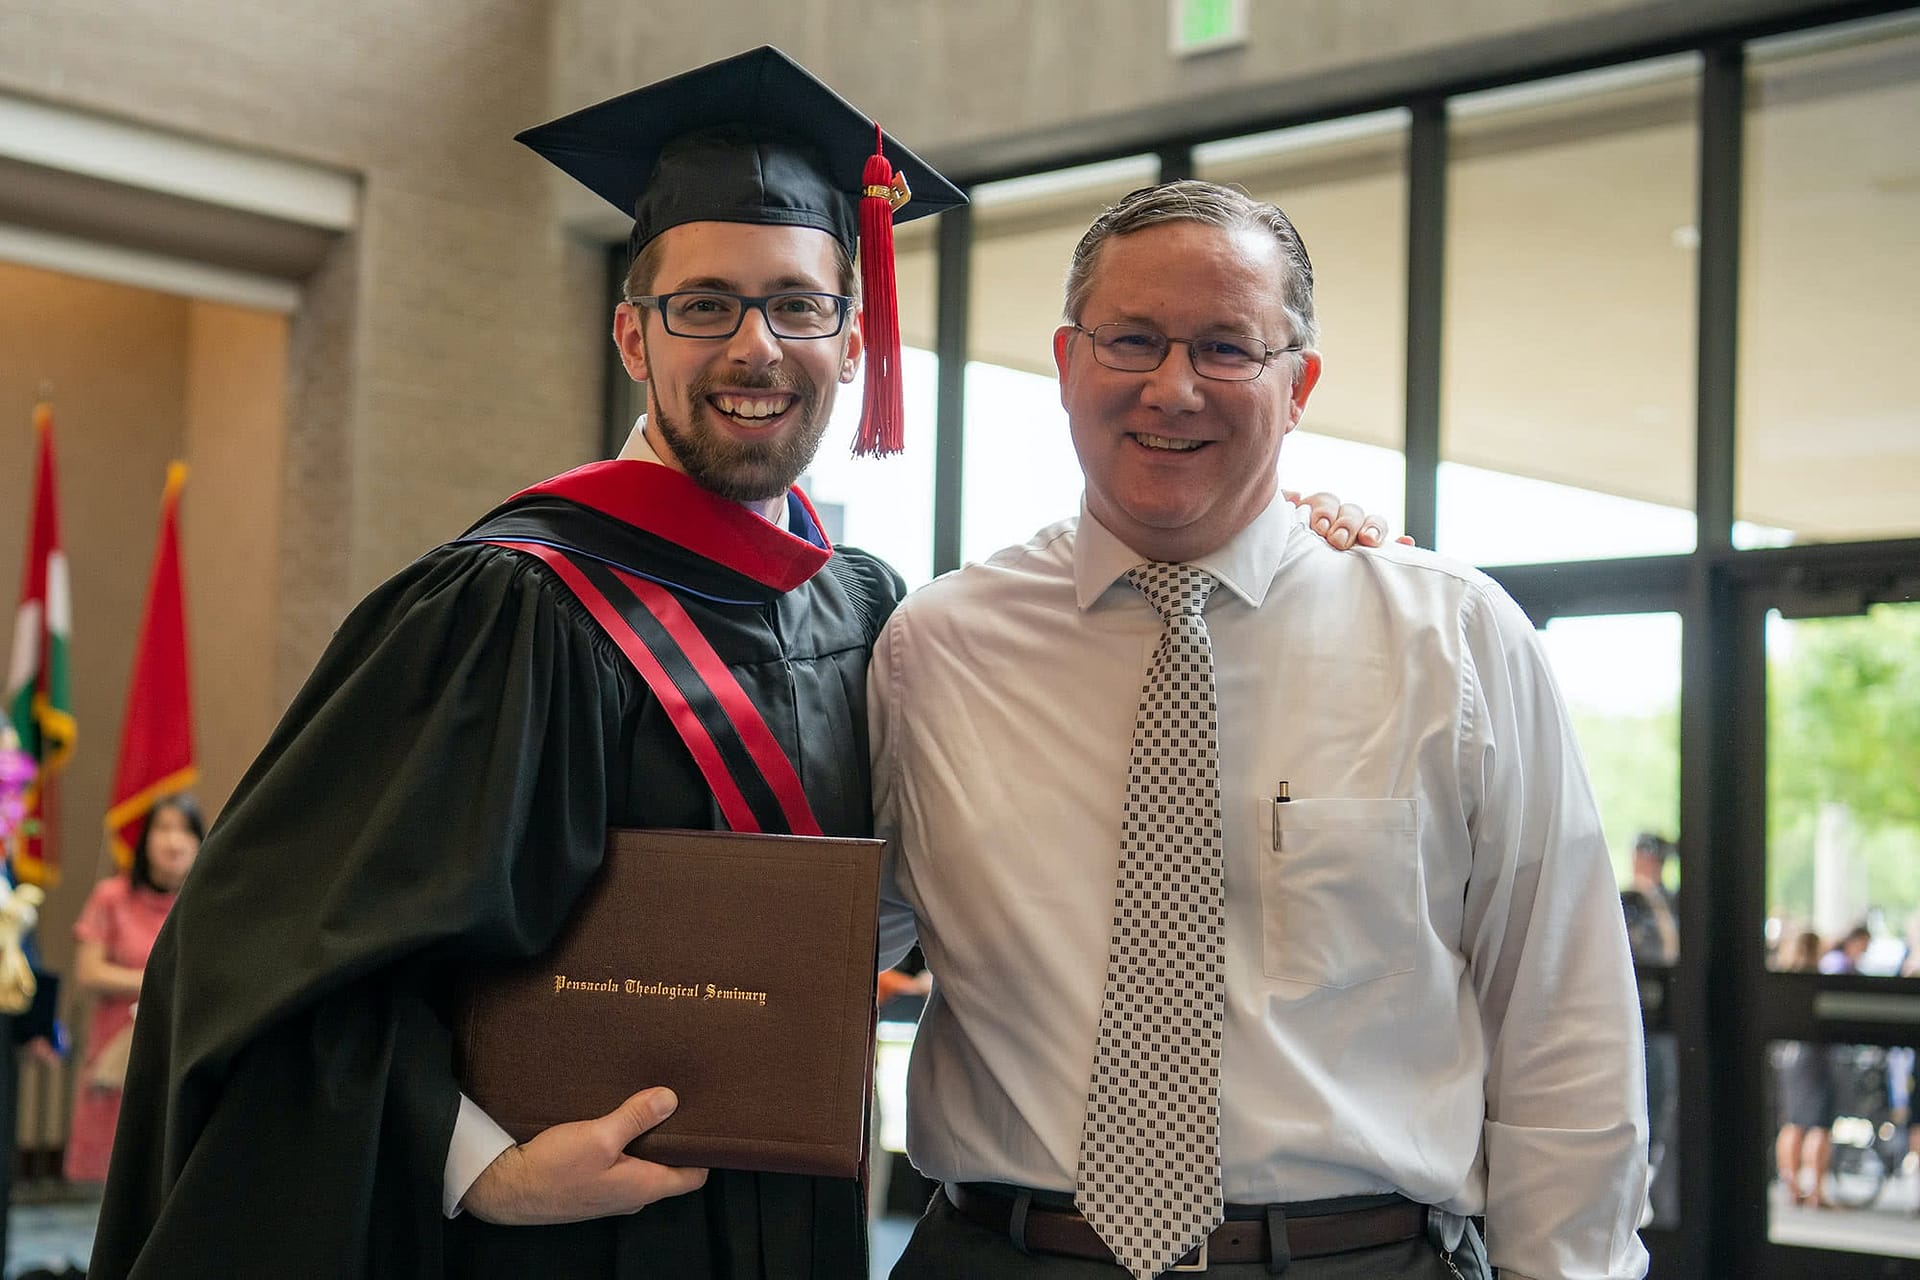 A Seminary graduate poses with a teacher